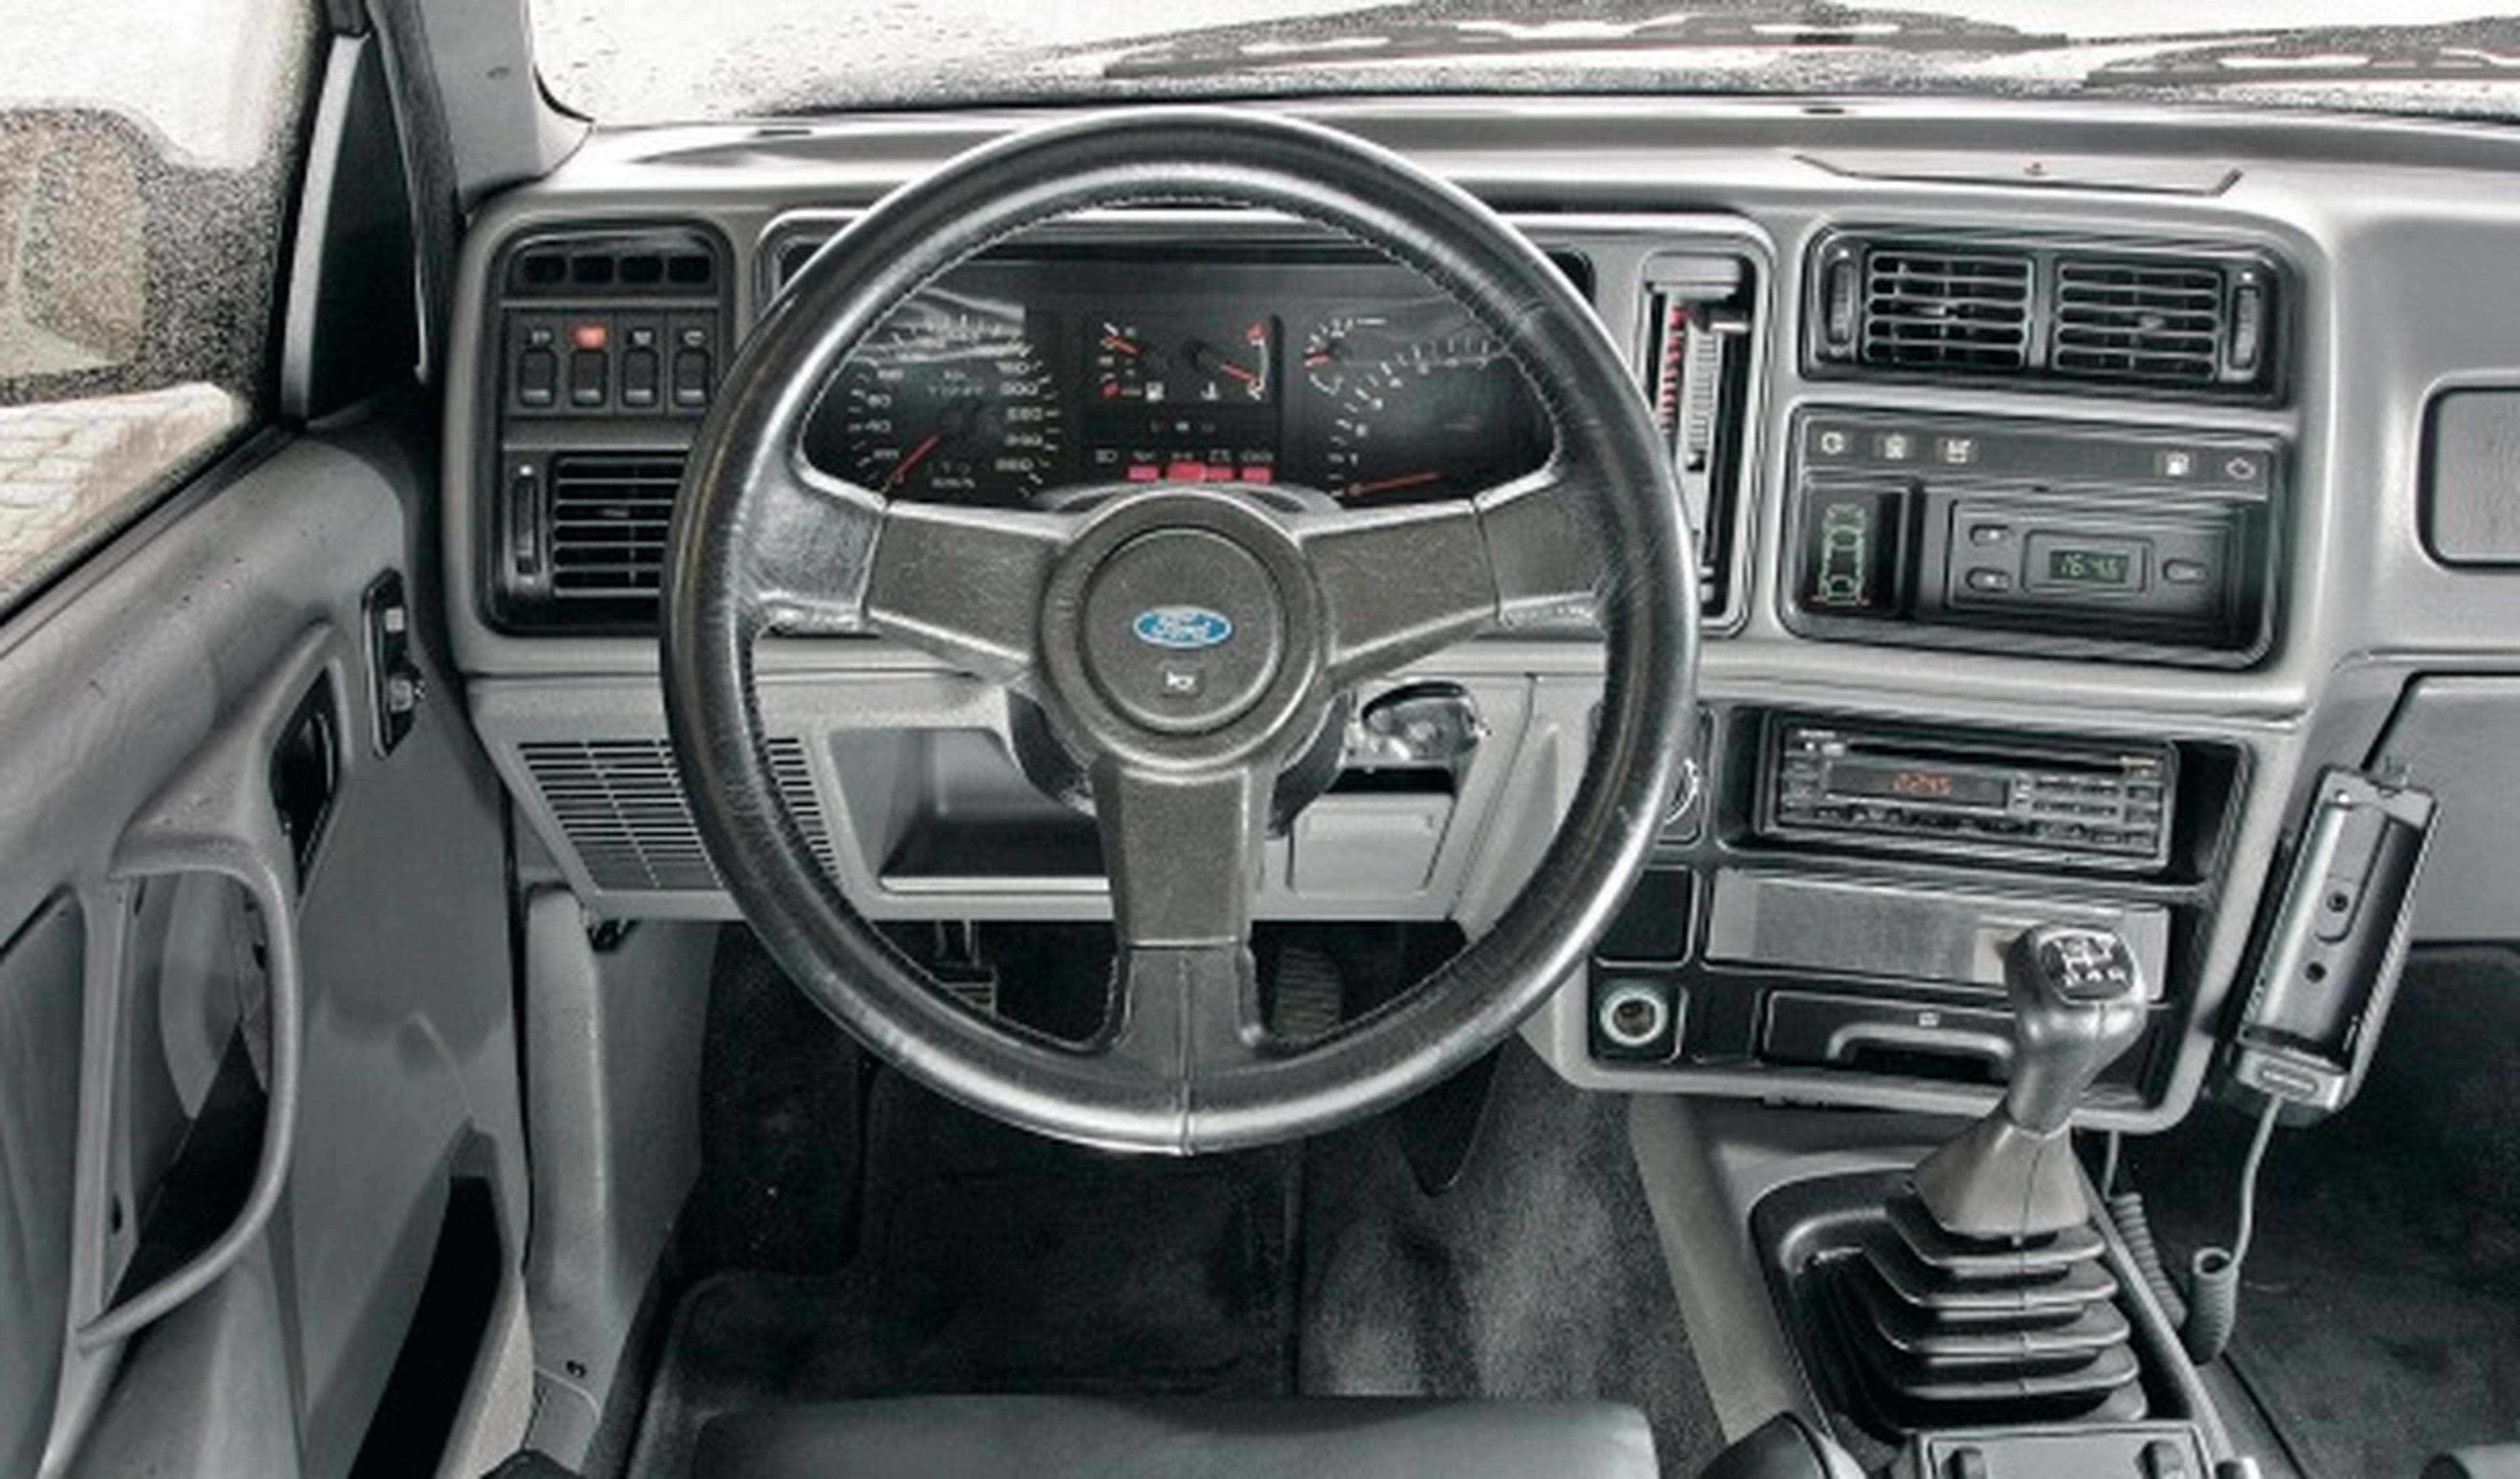 Ford Sierra Cosworth interior